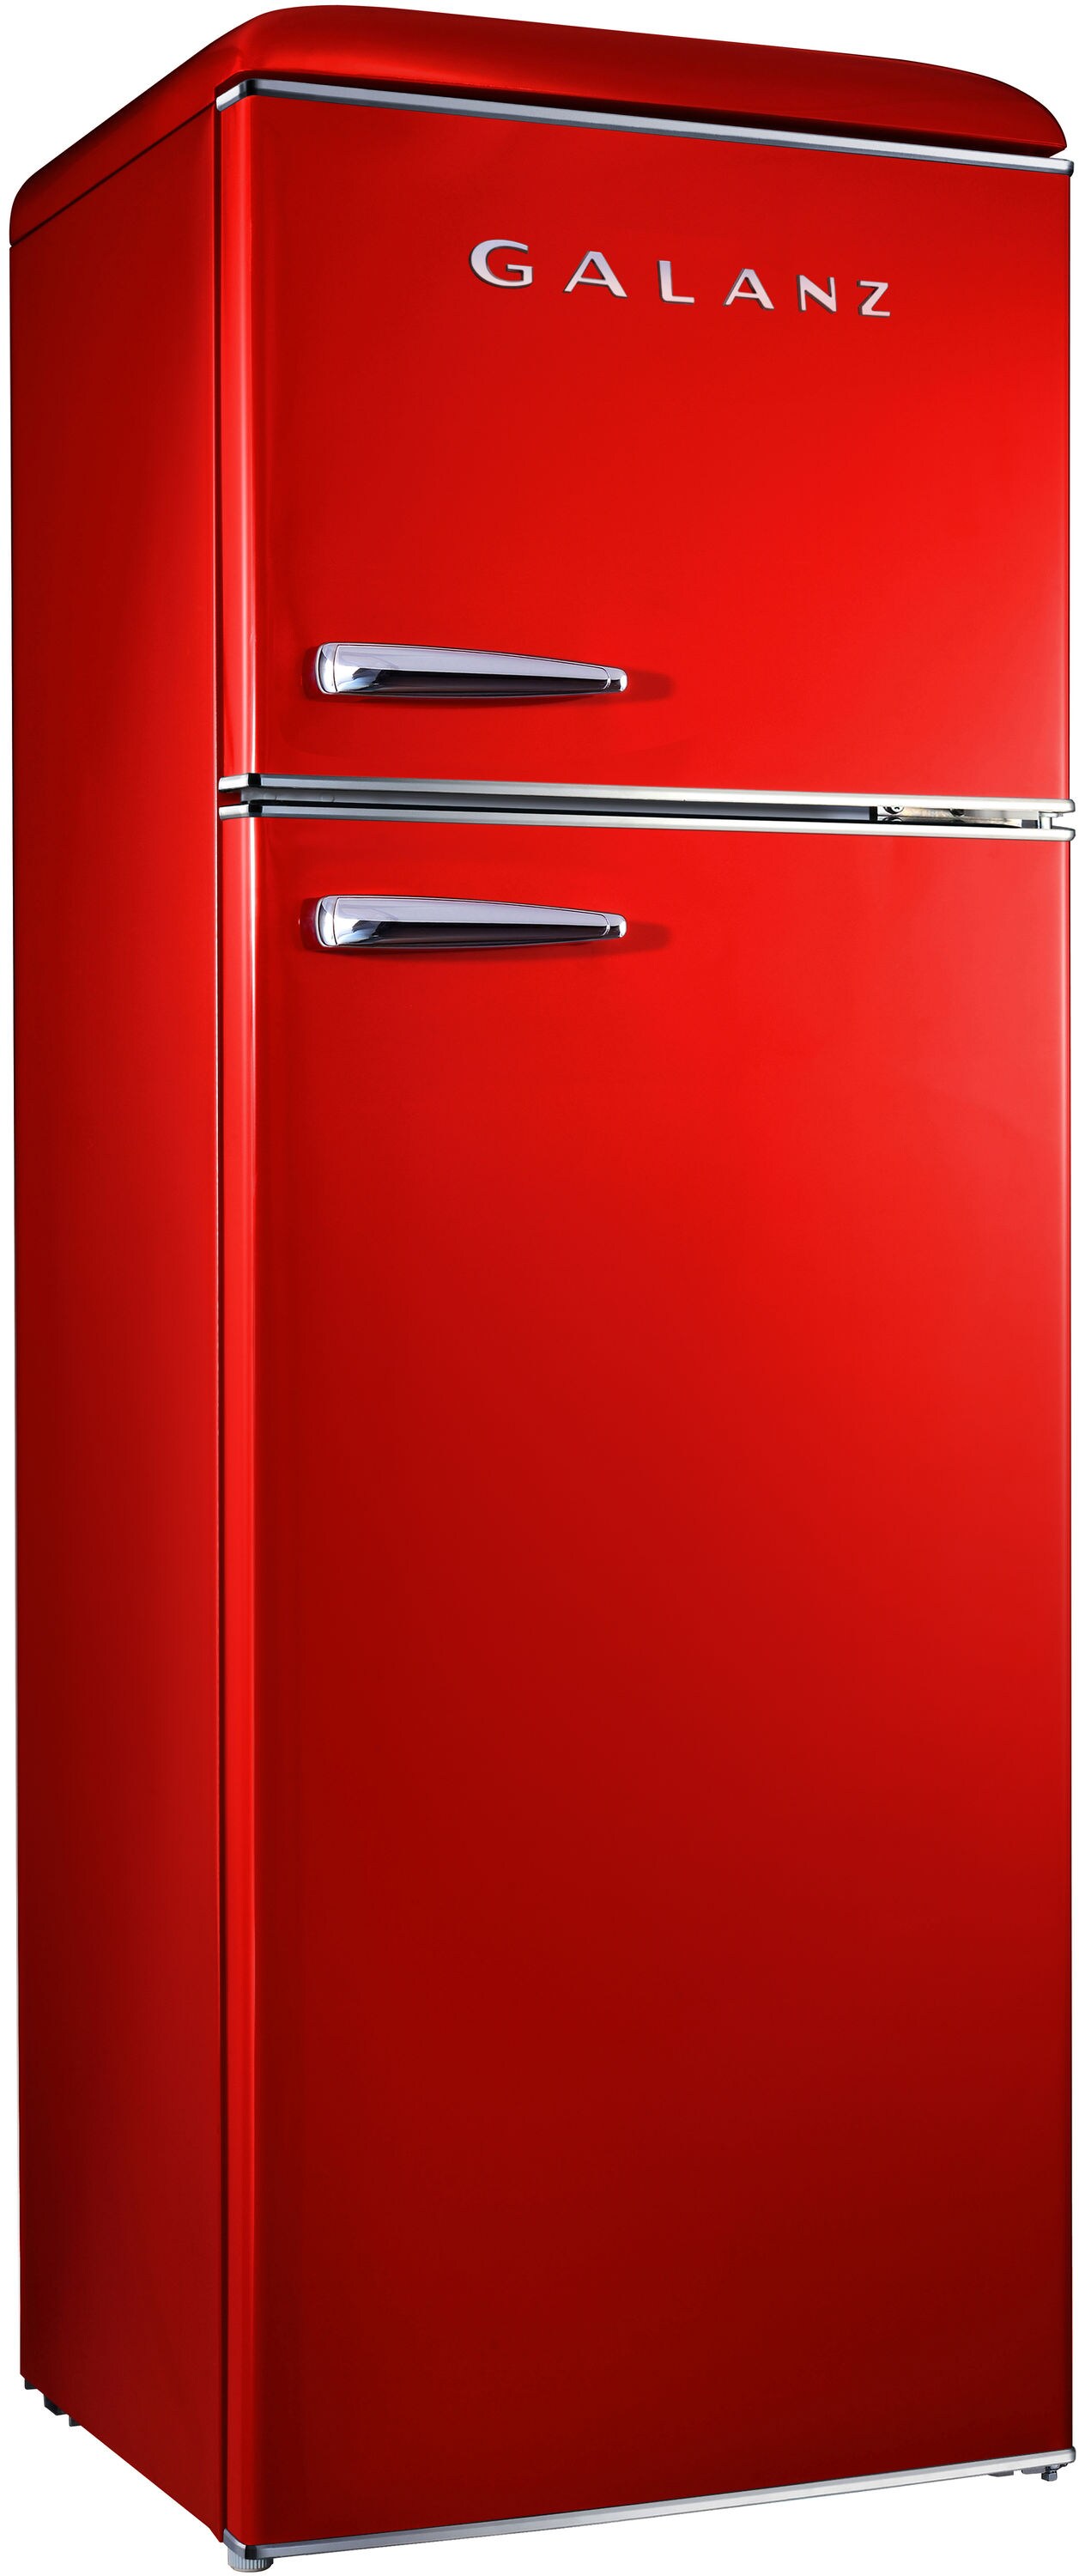 Galanz 12-cu ft Counter-depth Top-Freezer Refrigerator (Hot Rod